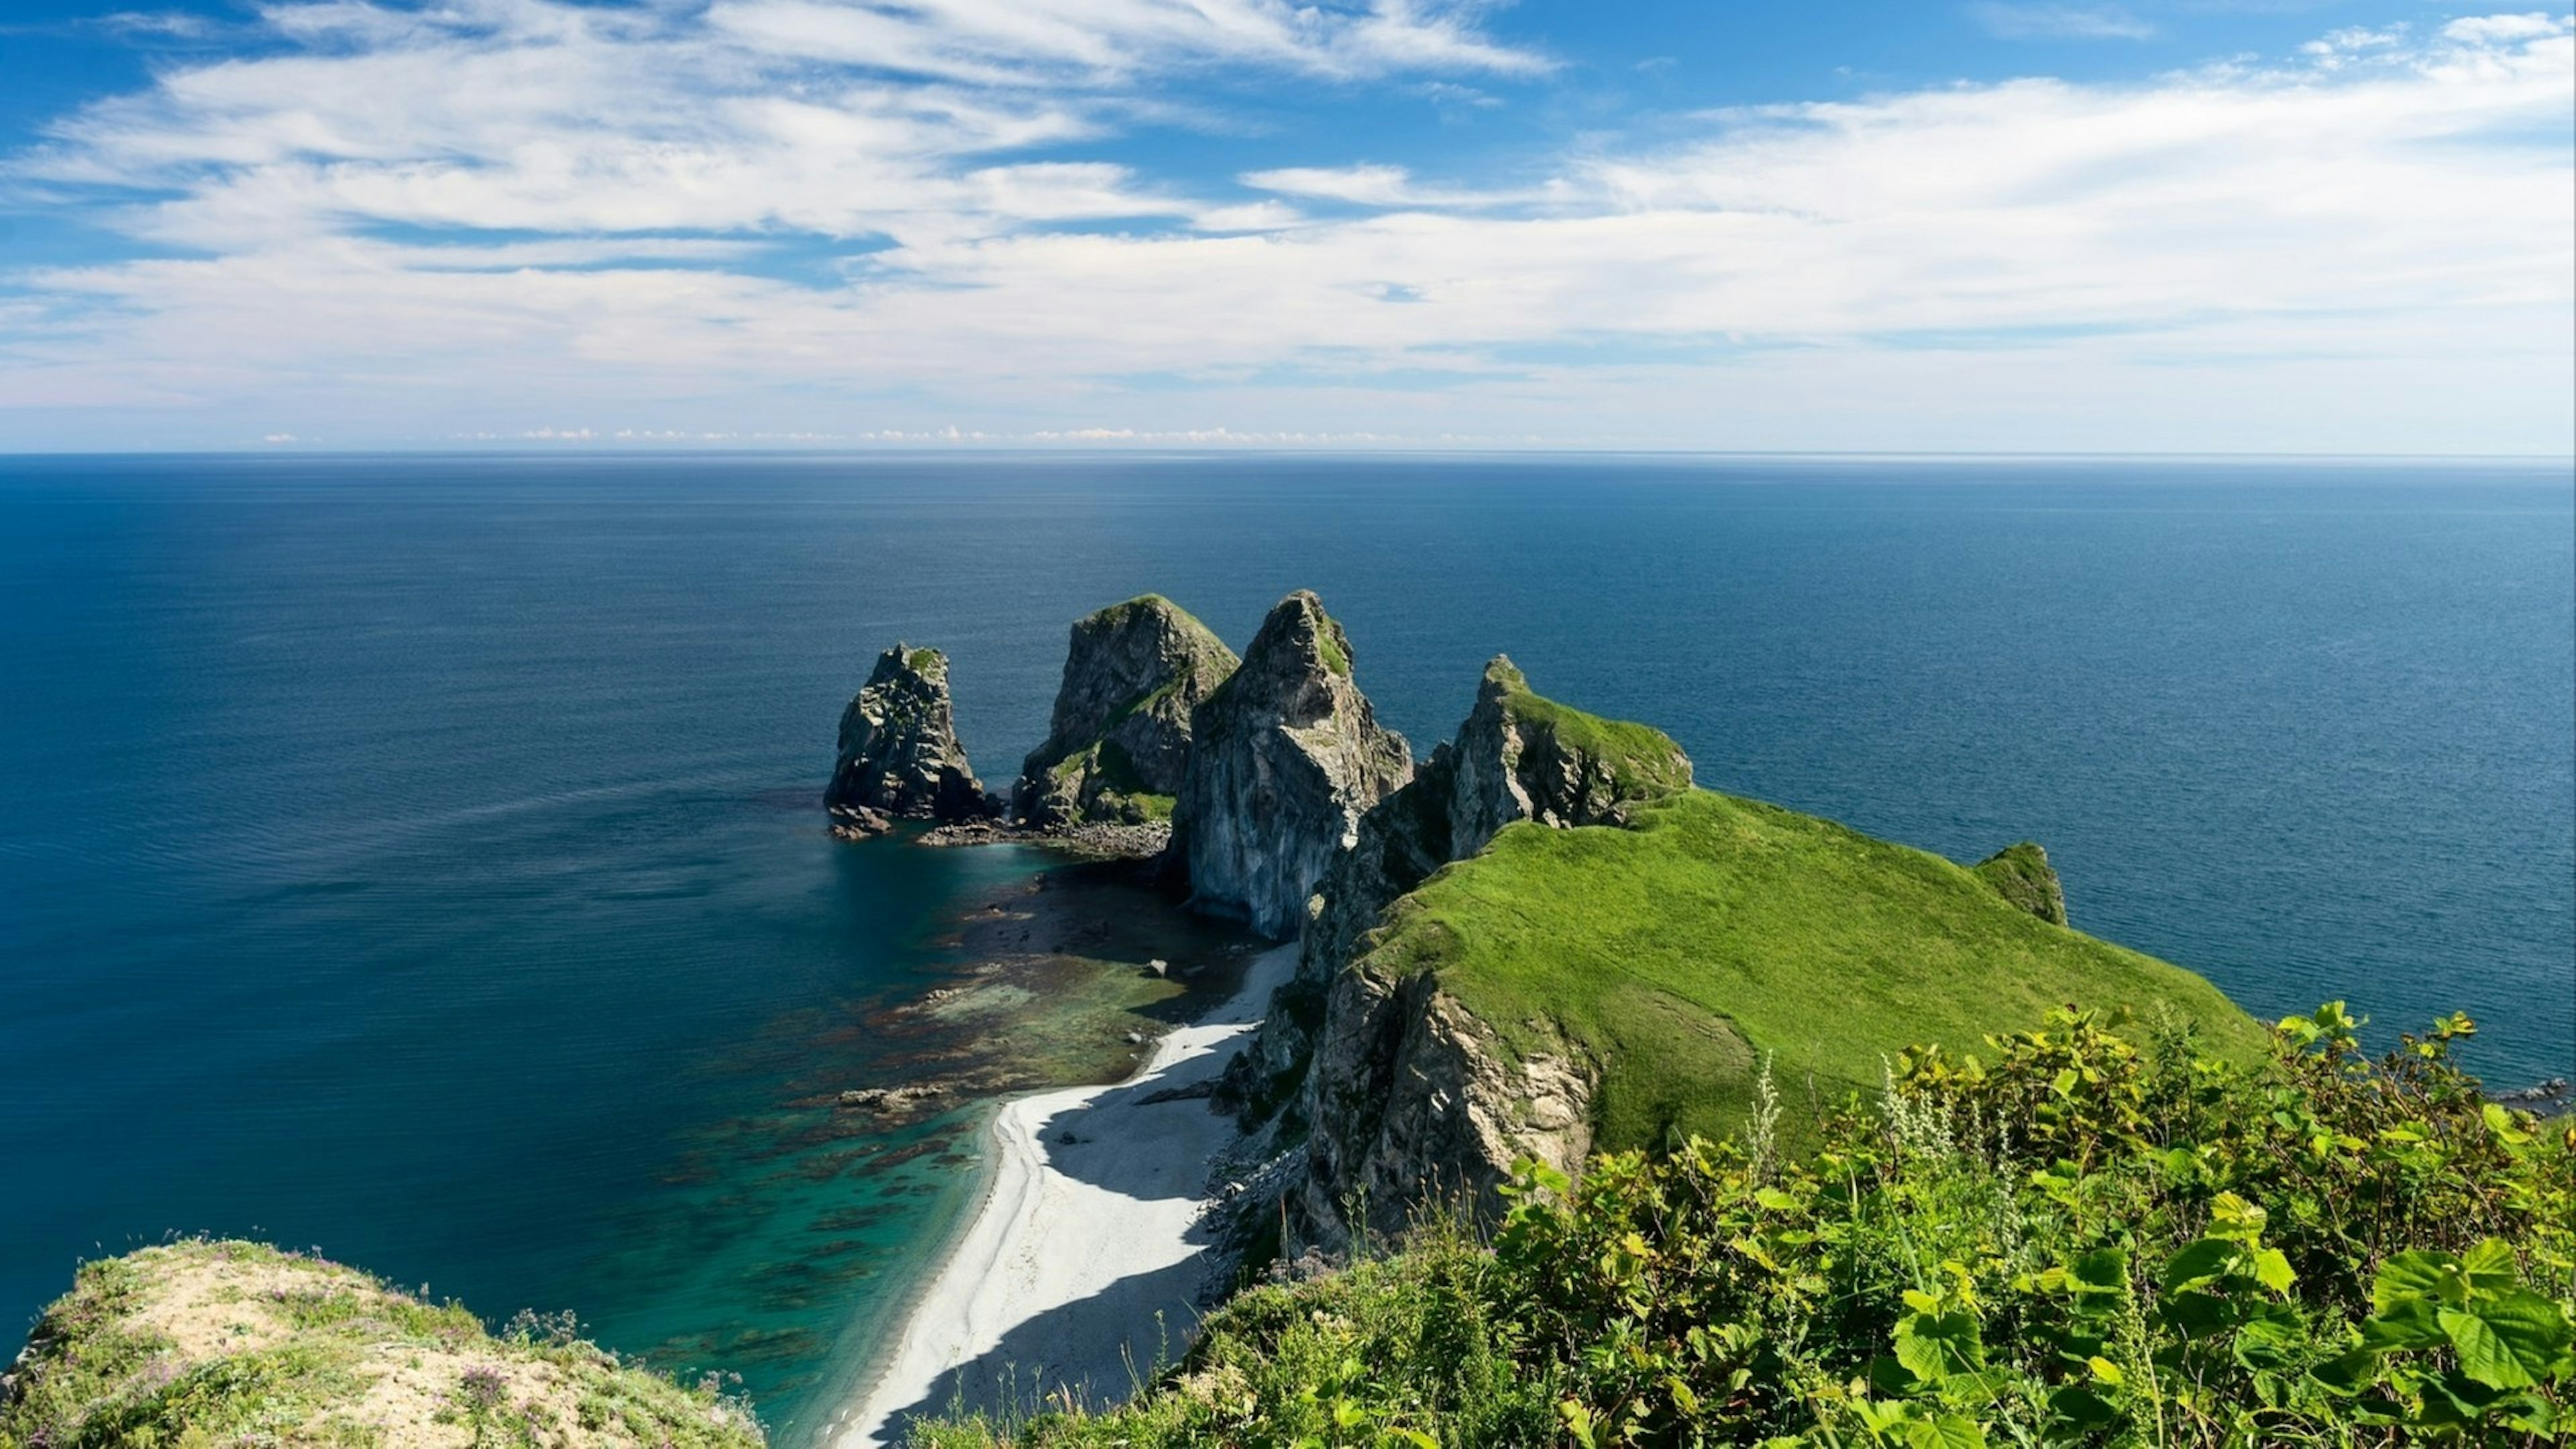 Cape by name Four cliff Russia Primorsky Krai.